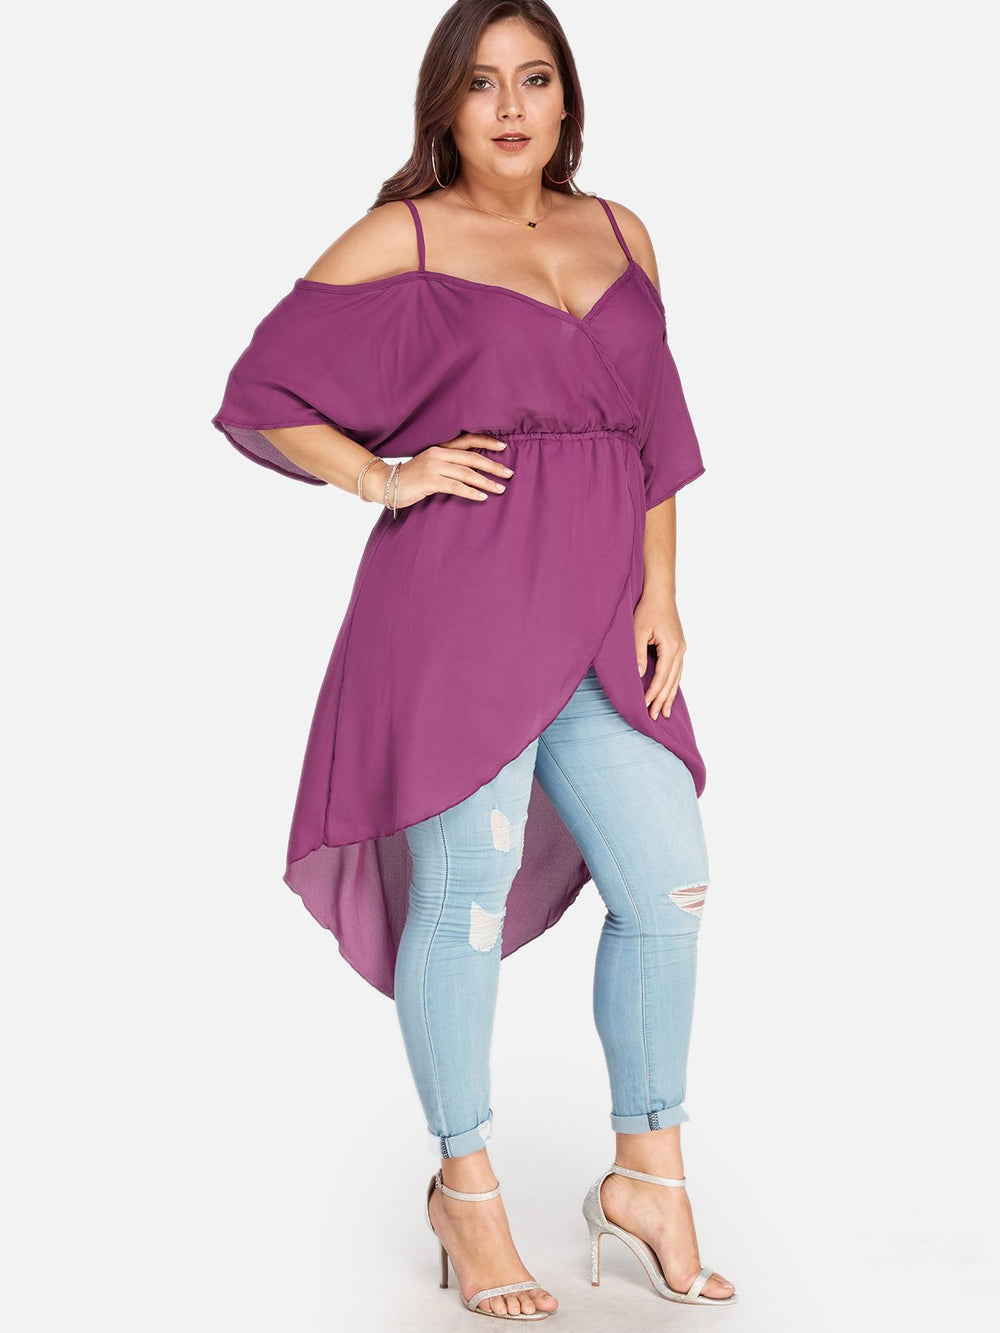 Ladies Purple Plus Size Tops